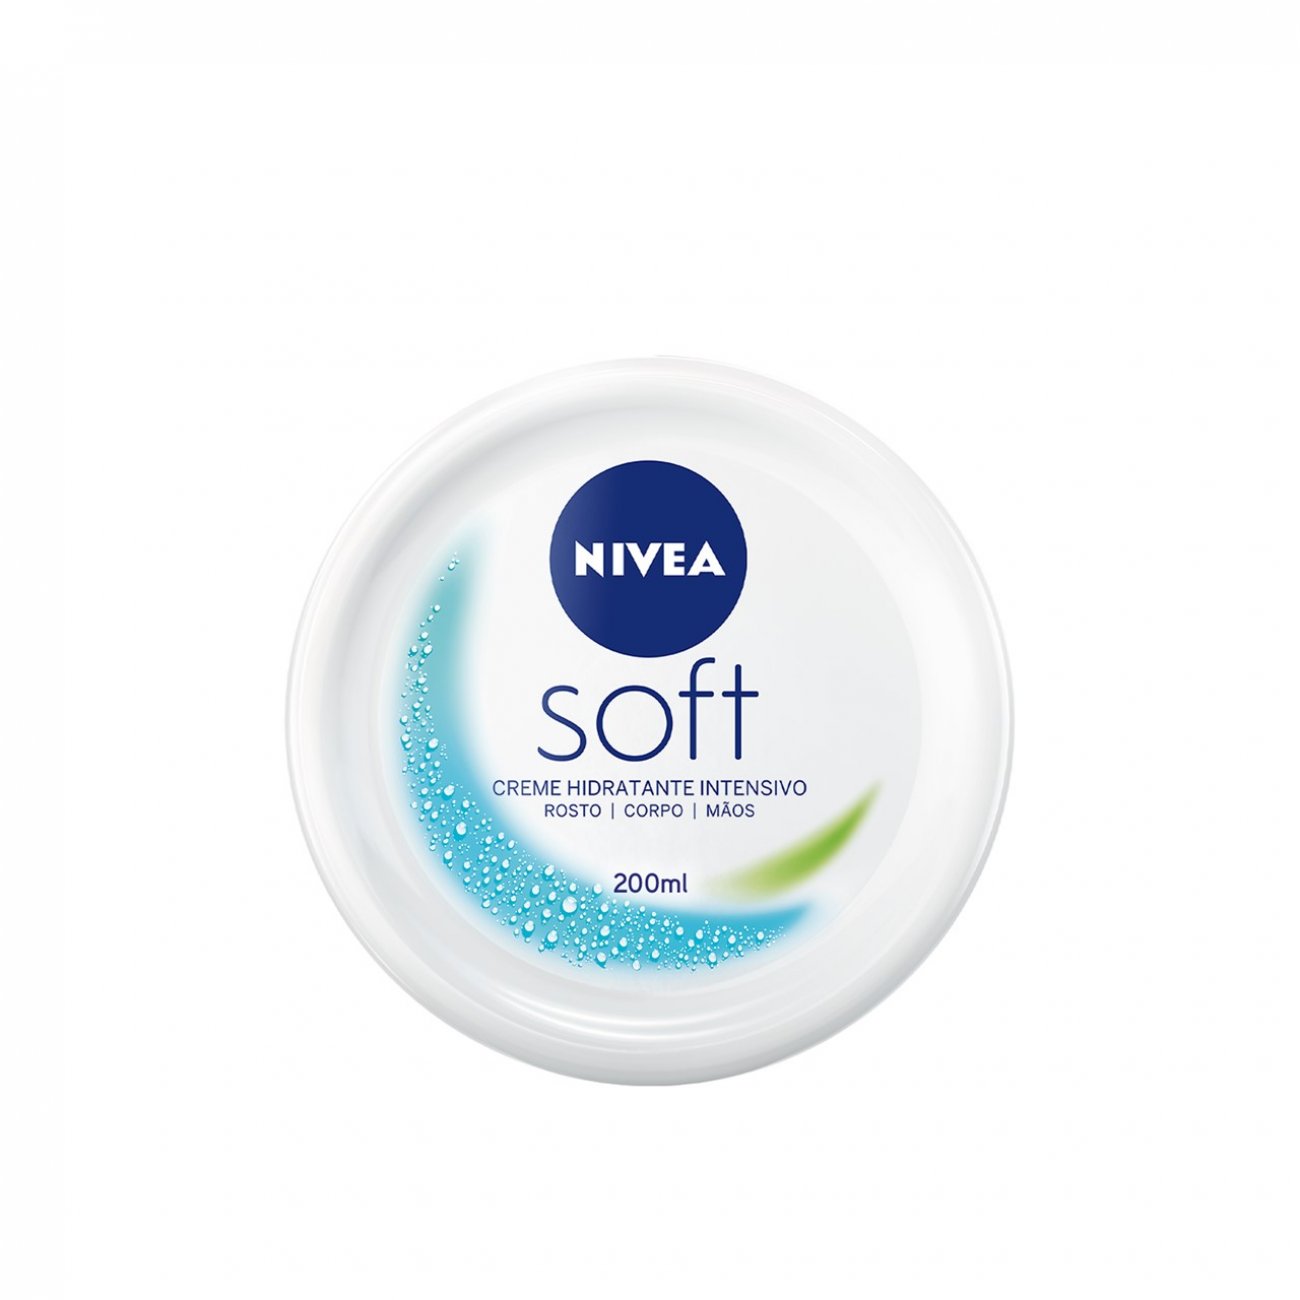 Buy Nivea Soft Refreshingly Intensive Moisturizing Cream 200ml (6.76fl oz) ·